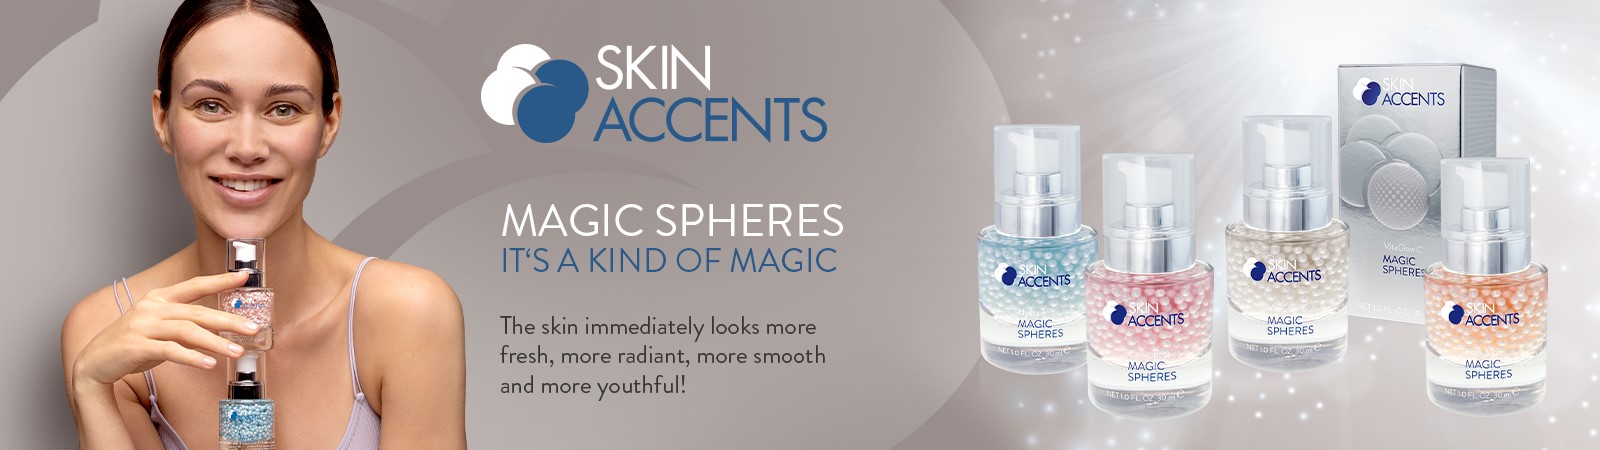 Skin Accents Magic Spheres